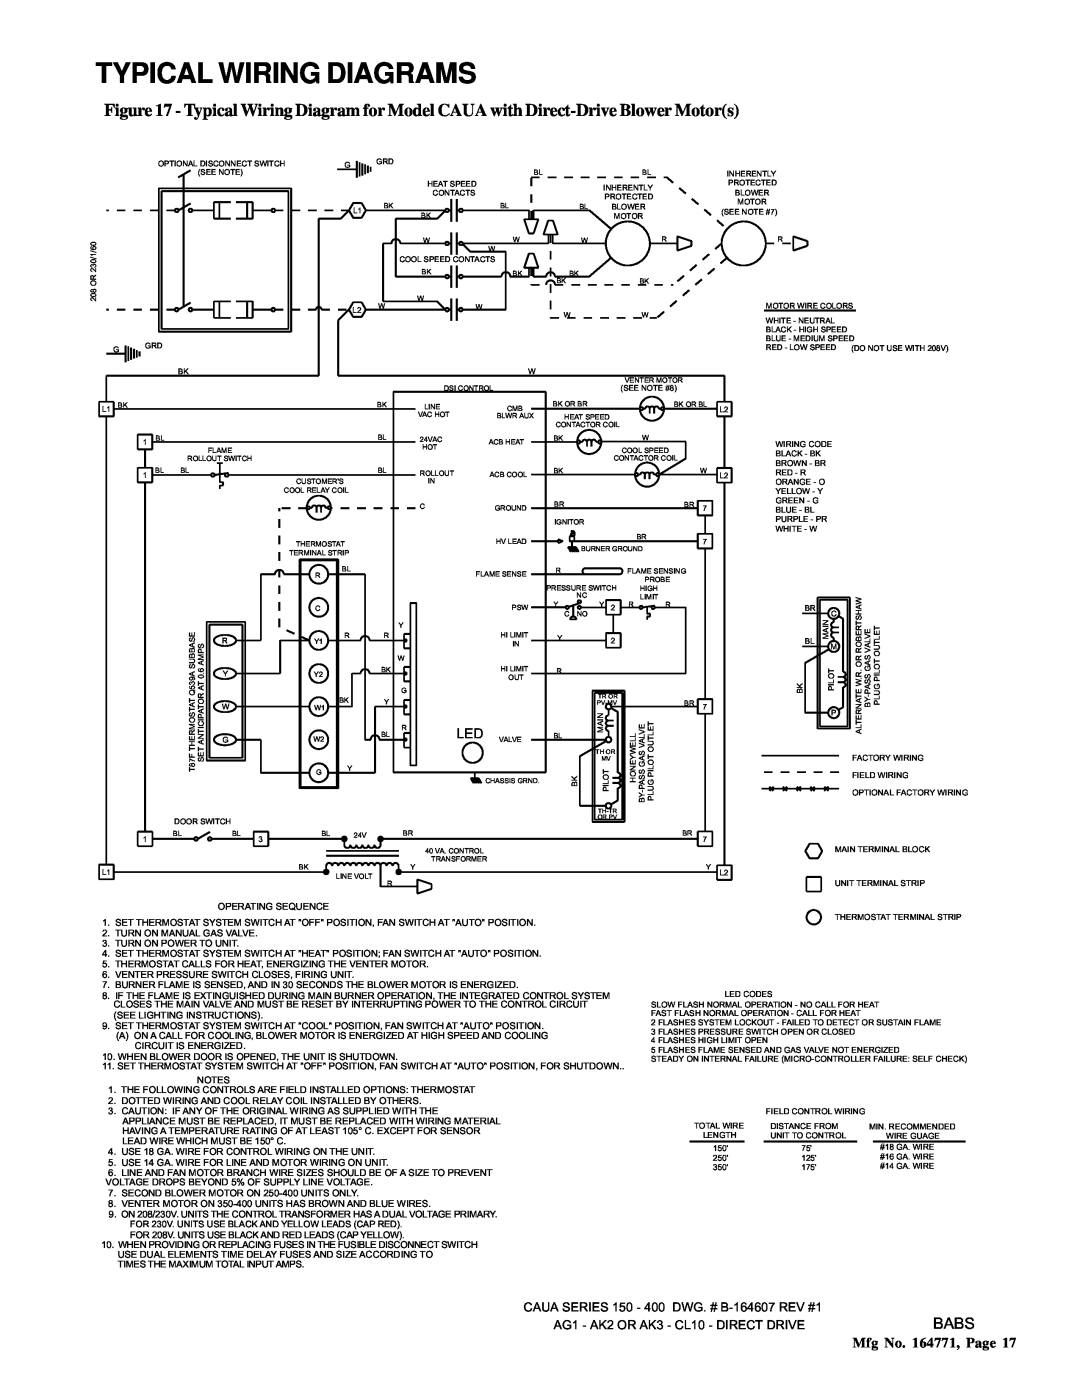 Thomas & Betts RZ405, RGM 405 Typical Wiring Diagrams, Babs, Mfg No. 164771, Page, AG1 - AK2 OR AK3 - CL10 - DIRECT DRIVE 